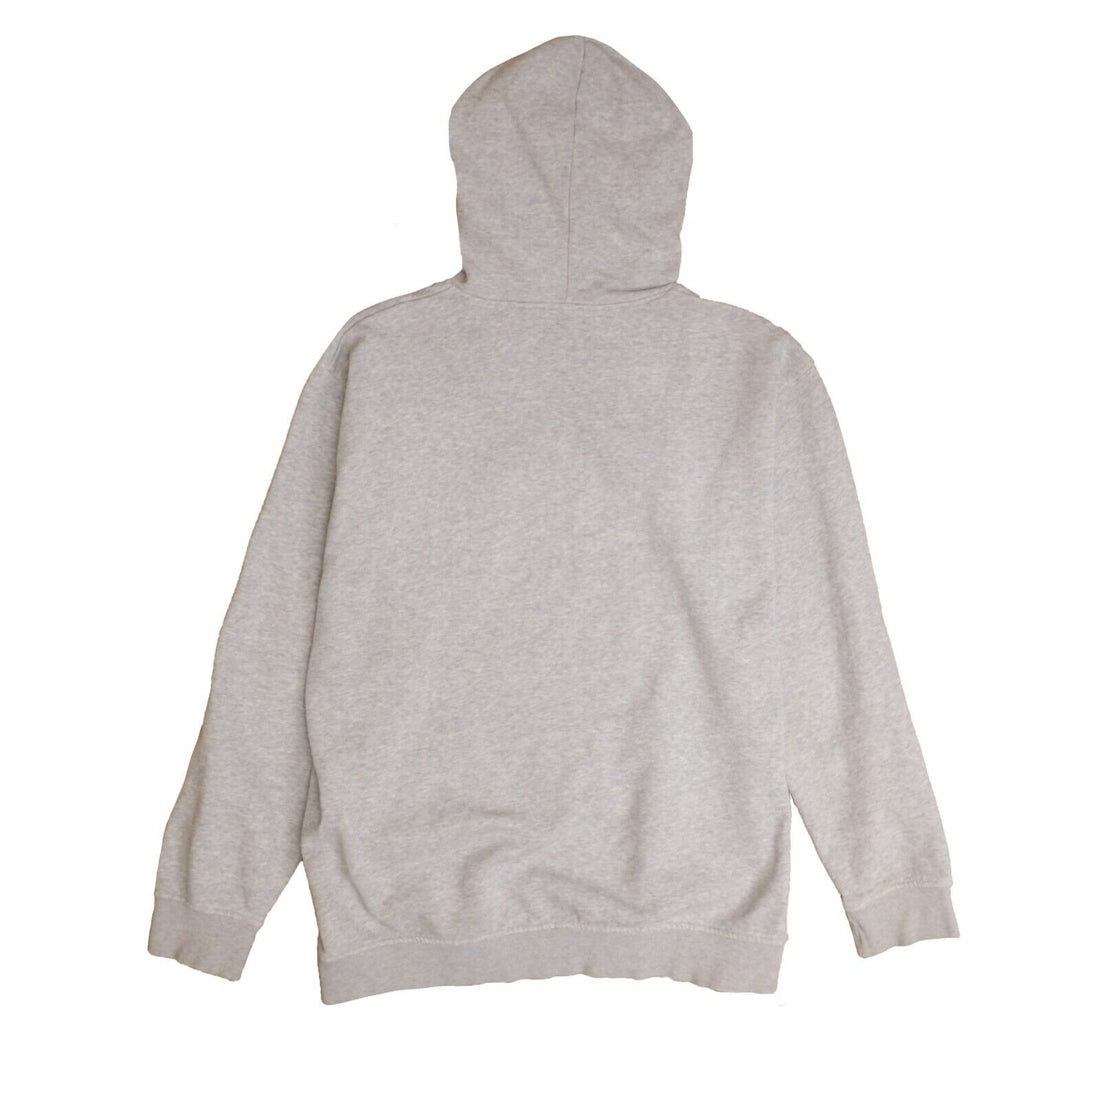 Vintage Nike Spell Out Sweatshirt Hoodie Size XL Gray